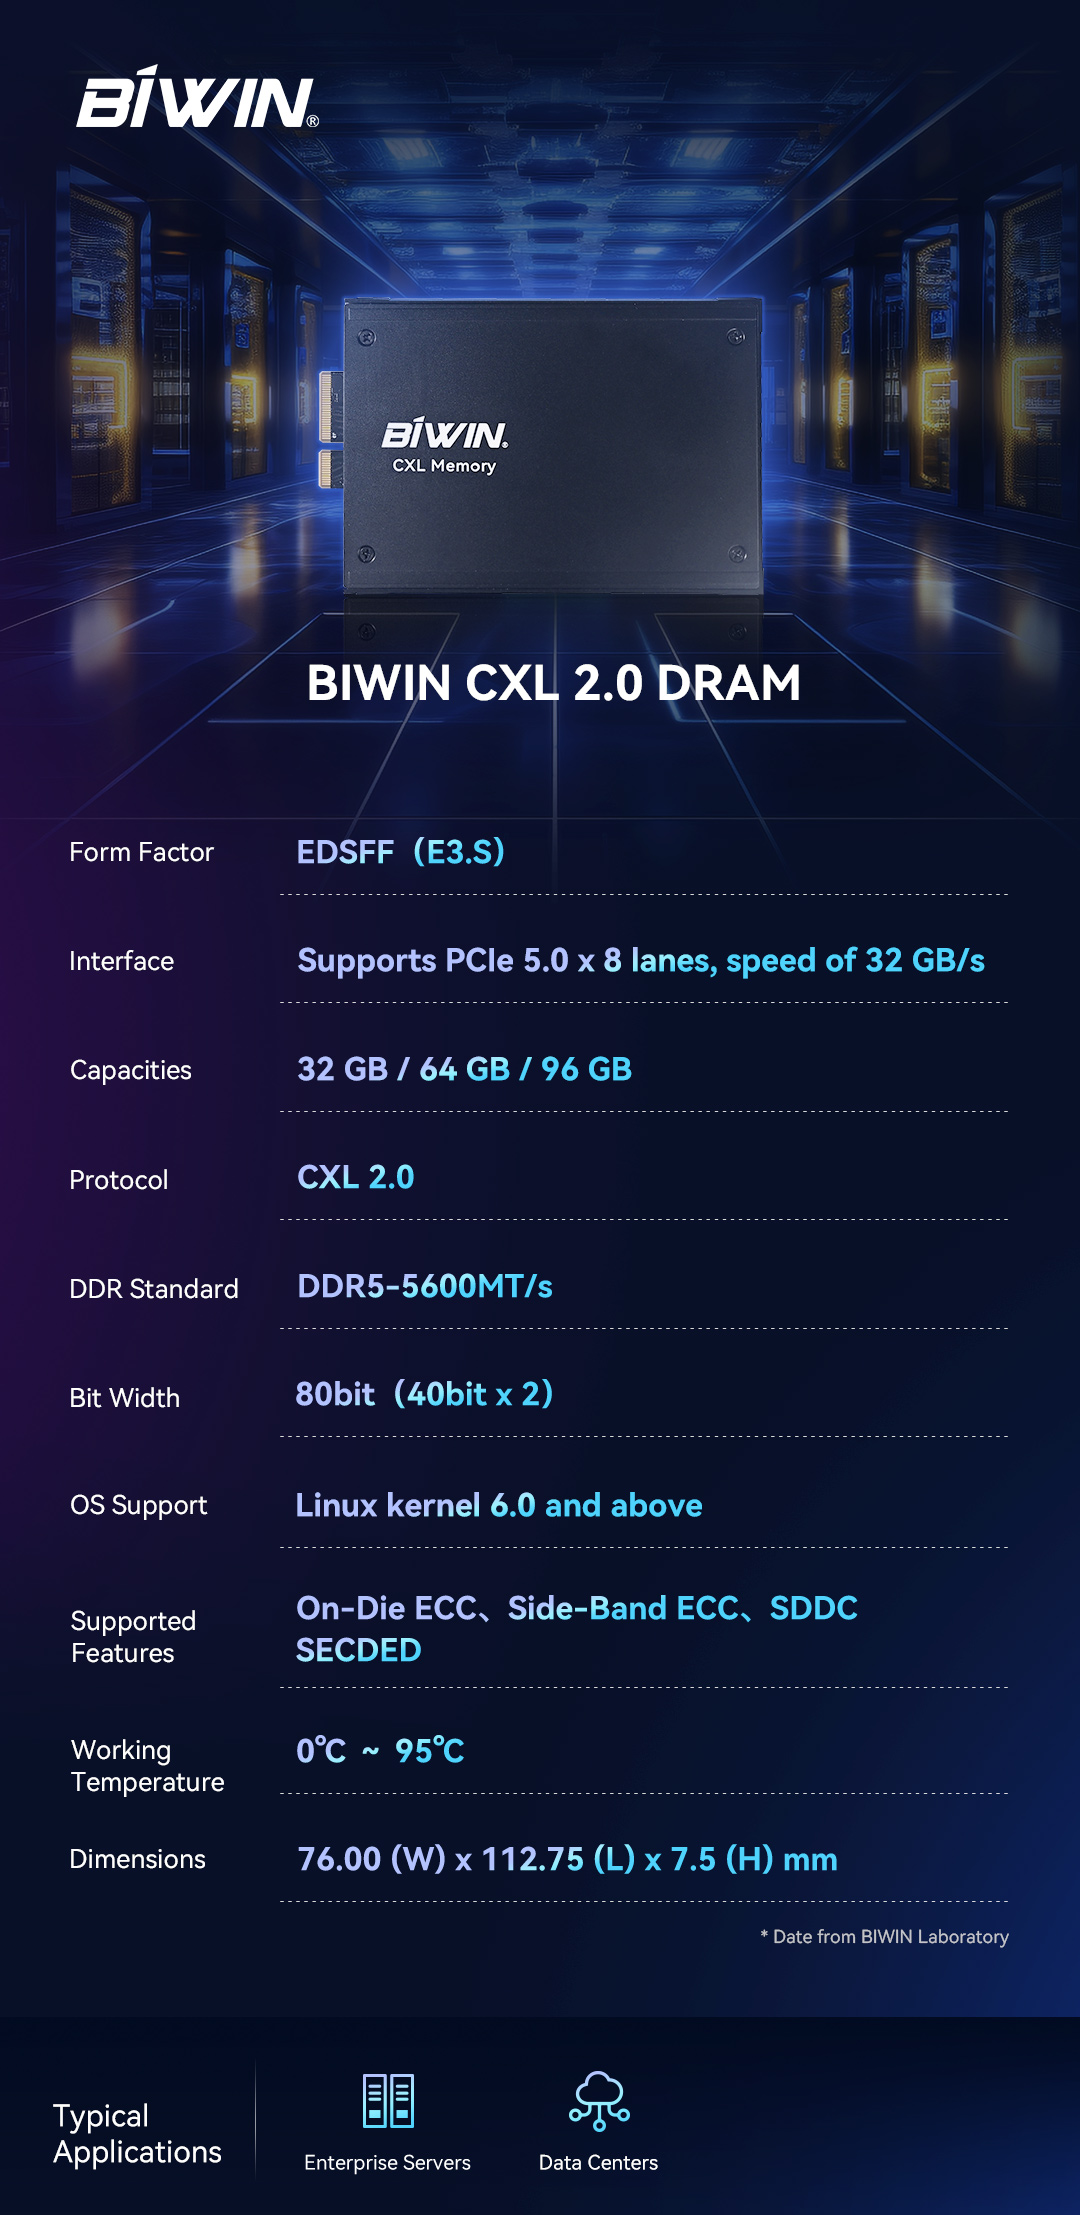 BIWIN CXL 2.0 DRAM